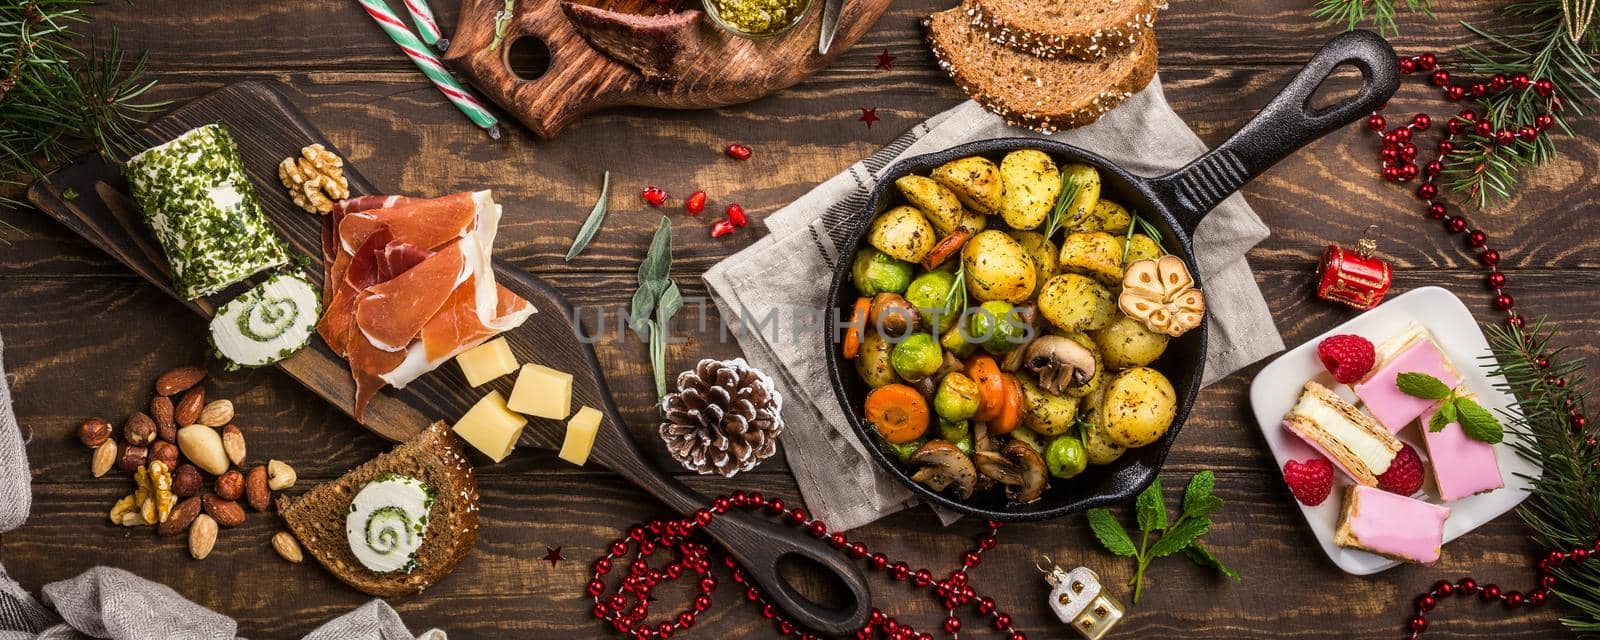 Christmas themed dinner table by IrynaMelnyk